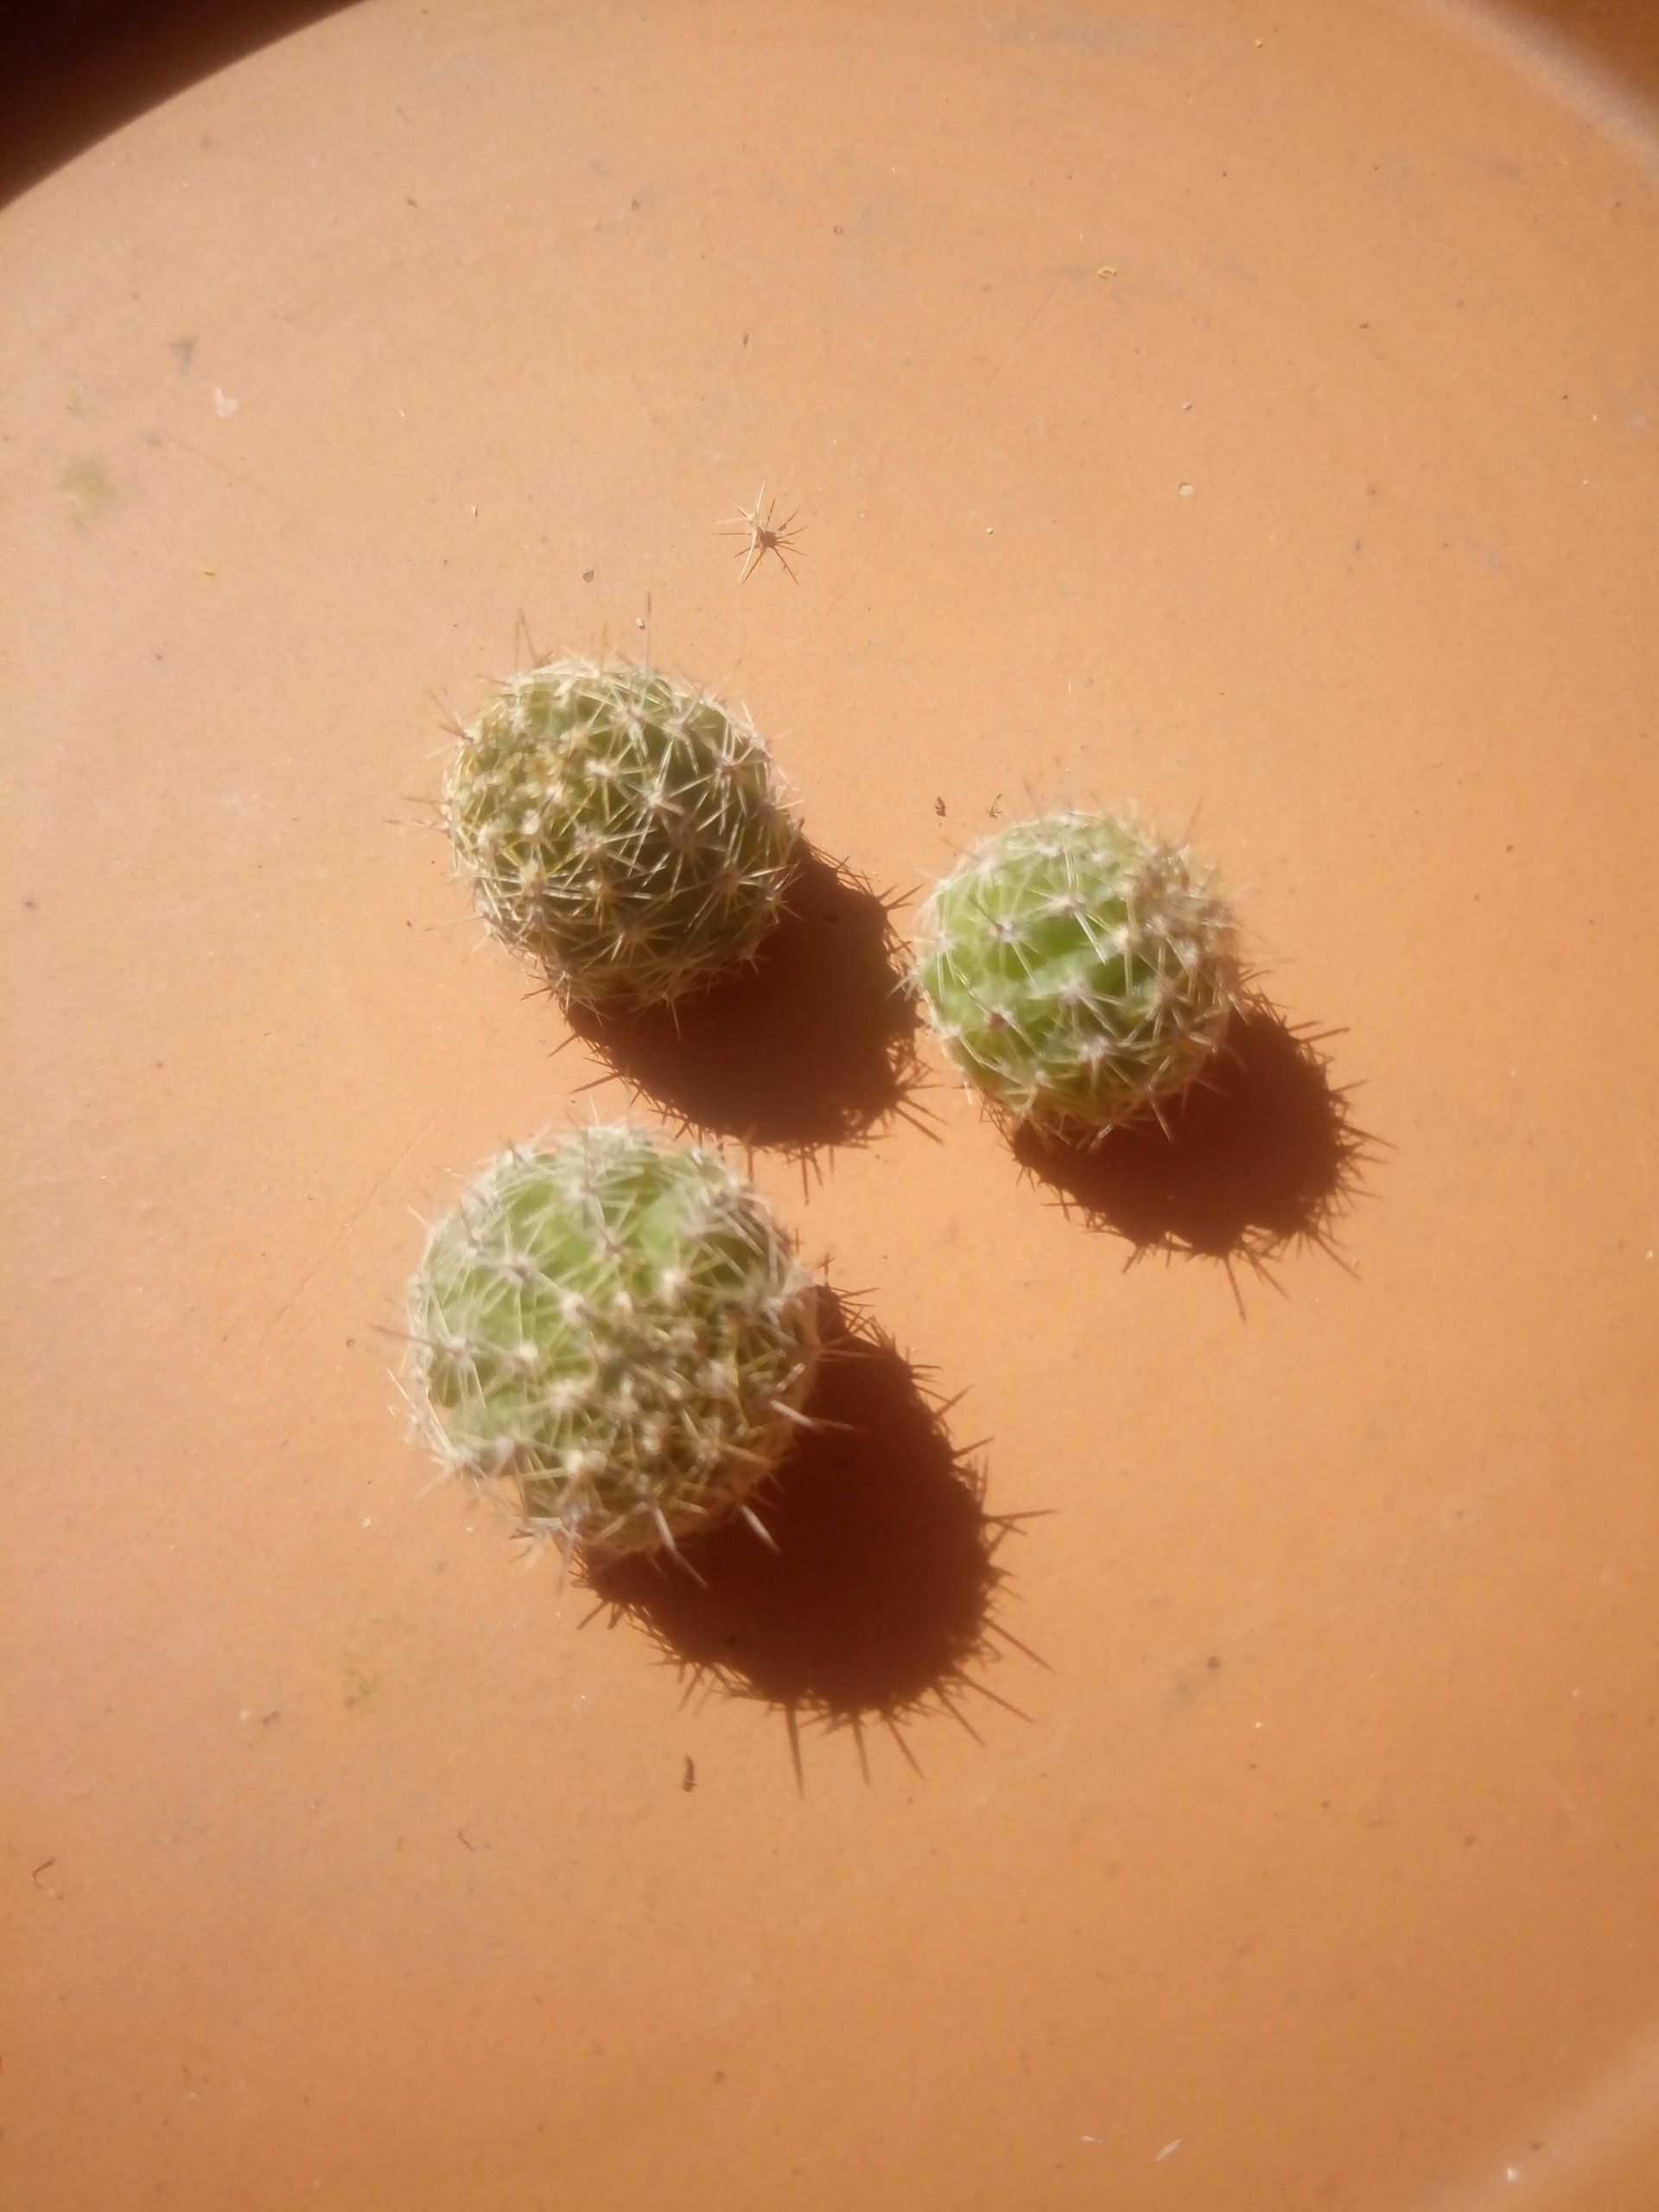 Chamaelobivia, or Peanut cactus offsets drying